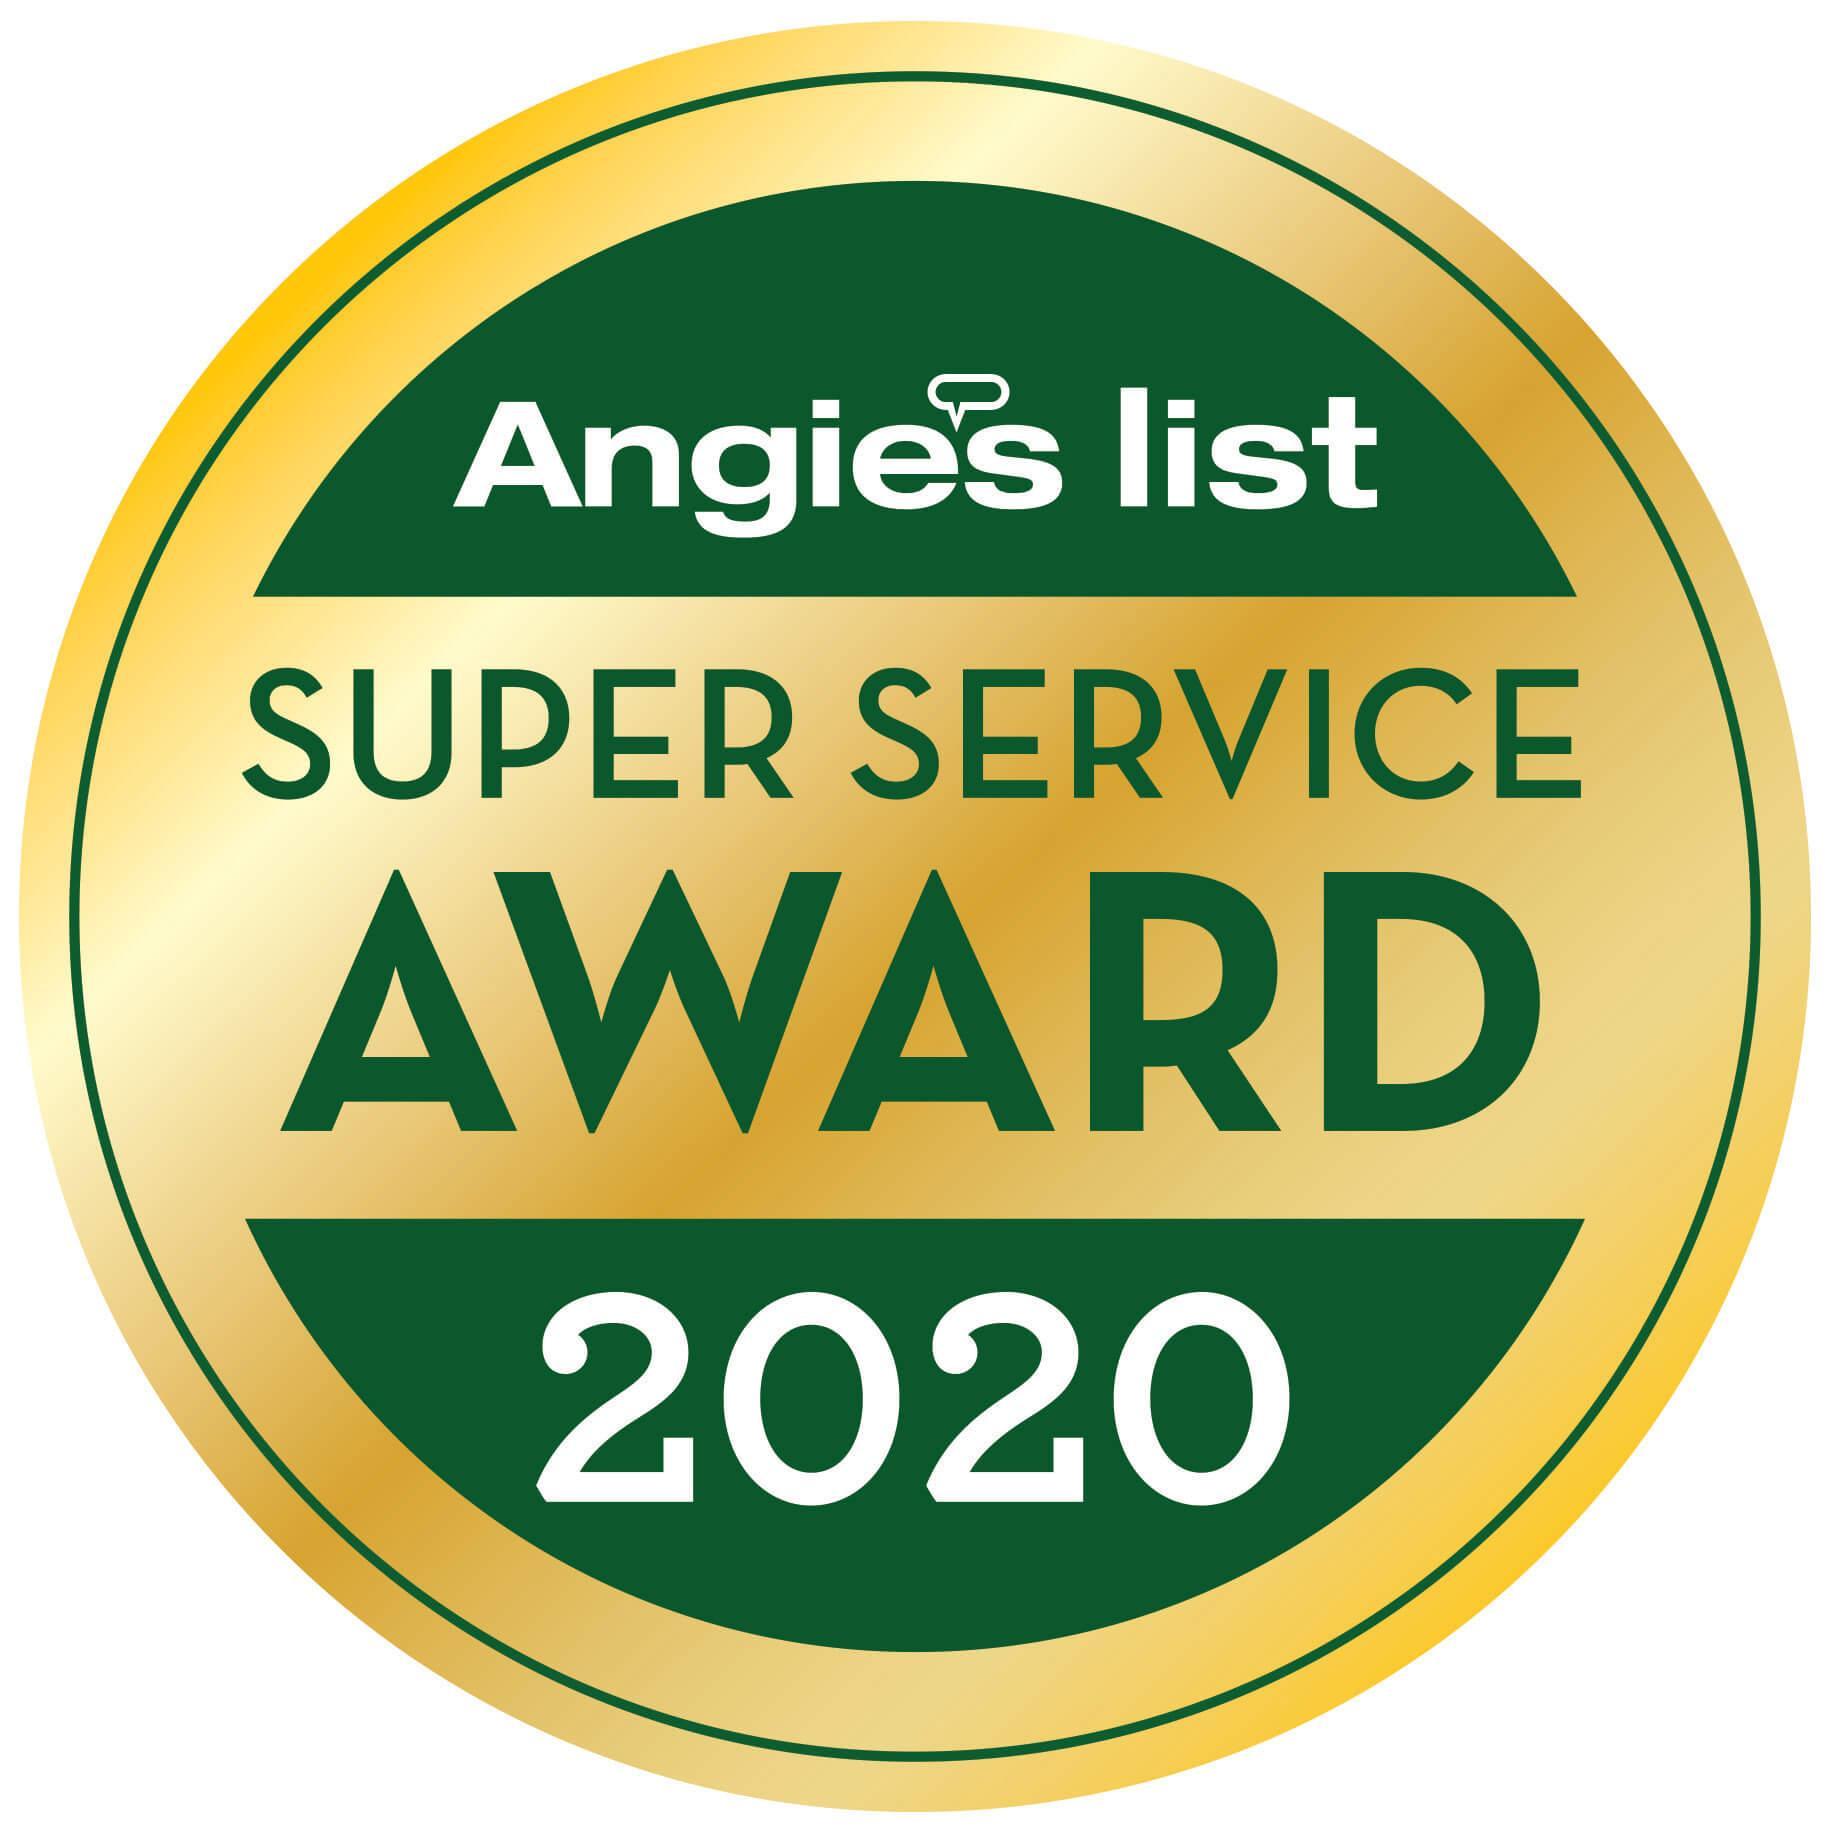 angies-list-super-service-award-winner-in-Sandyville